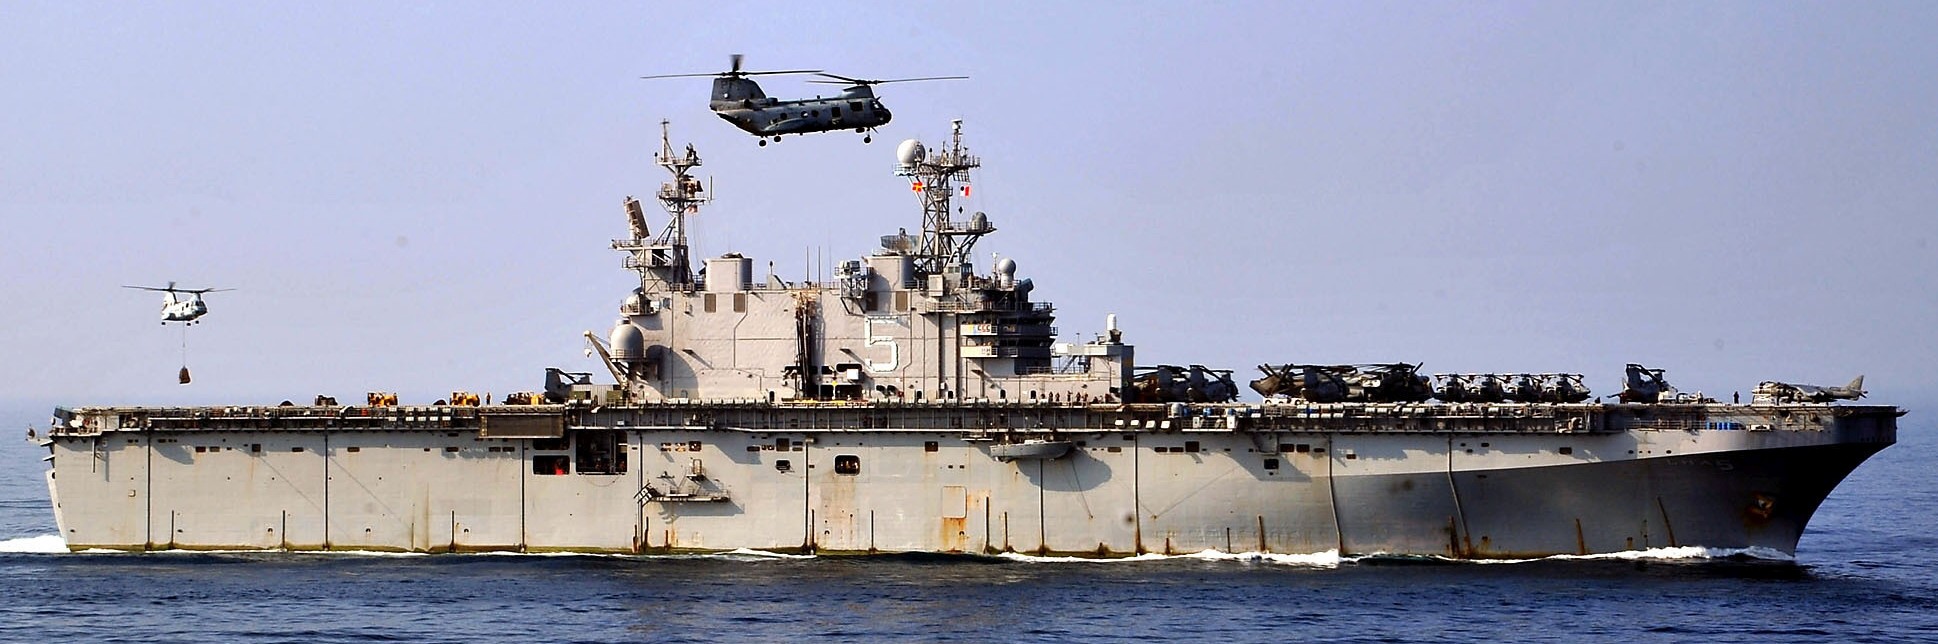 lha-5 uss peleliu tarawa class amphibious assault ship landing helicopter us navy hmm-364(rein) marines 85